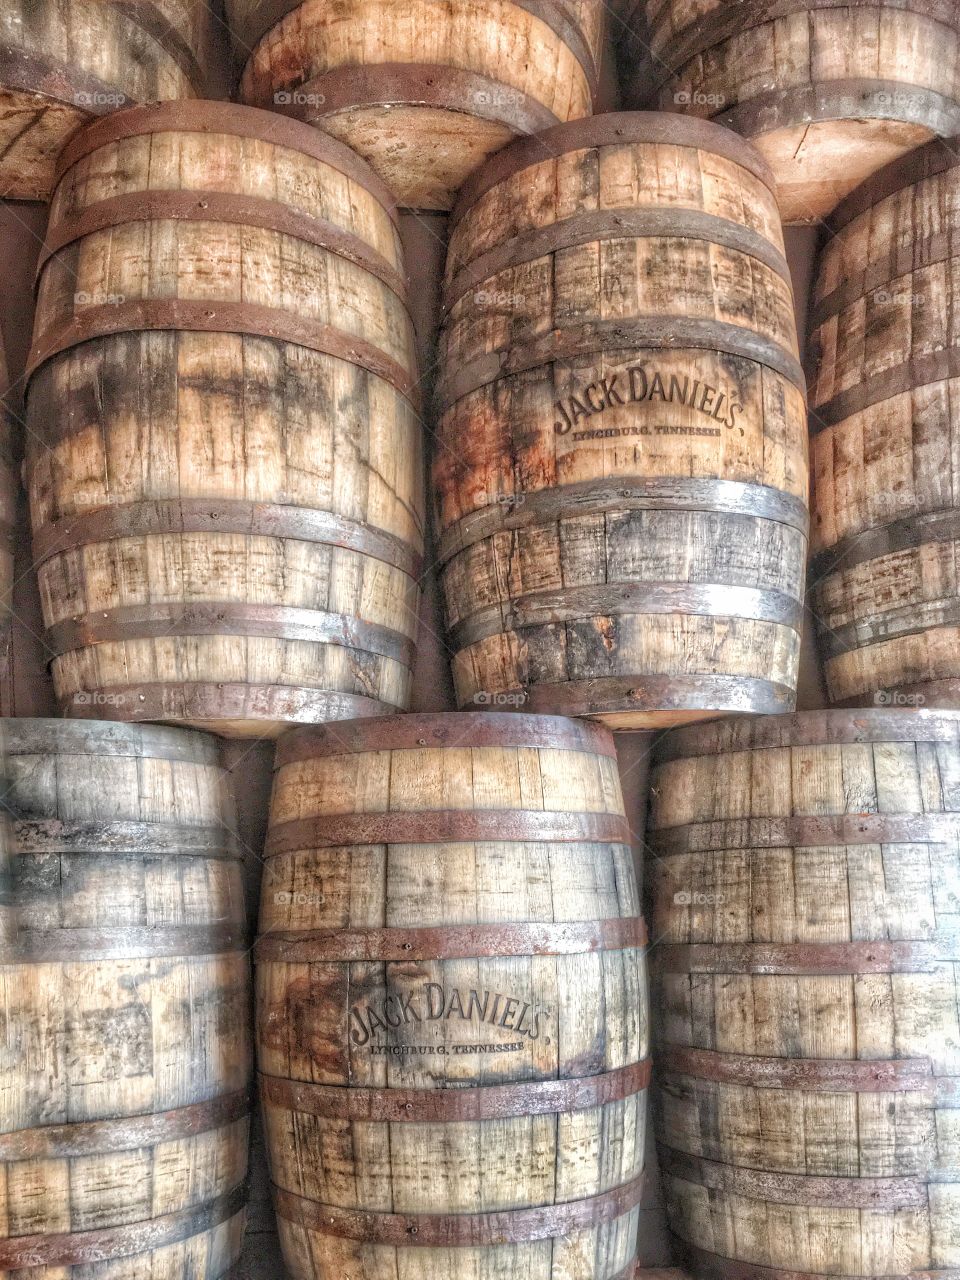 Jack Daniels old fashioned barrels